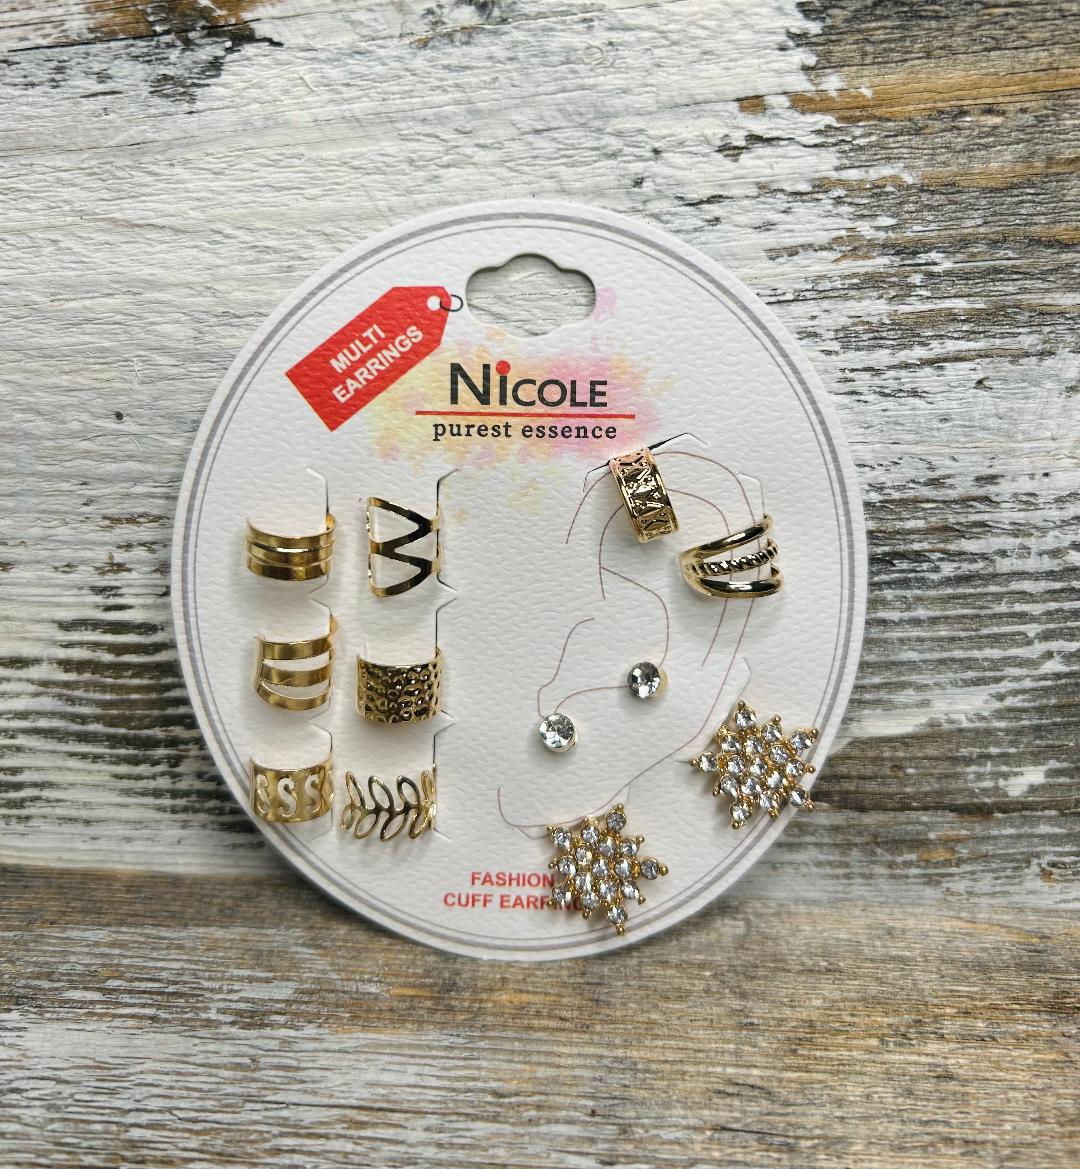 Nicole Cuff & Earring Set